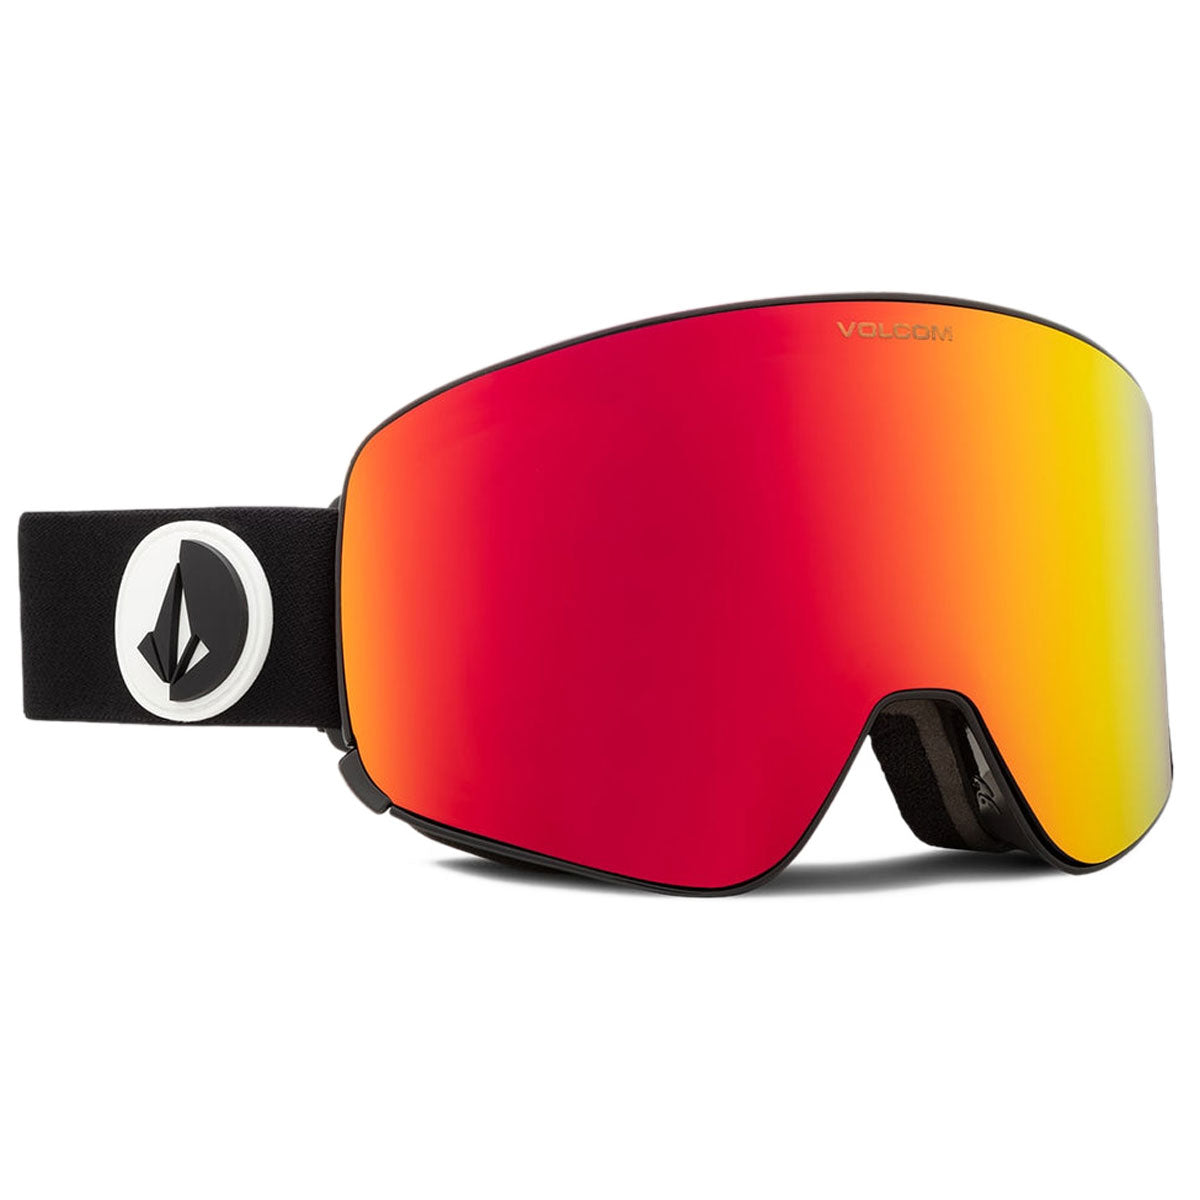 Volcom Odyssey Snowboard Goggles - Gloss Black/Red Chrome image 3